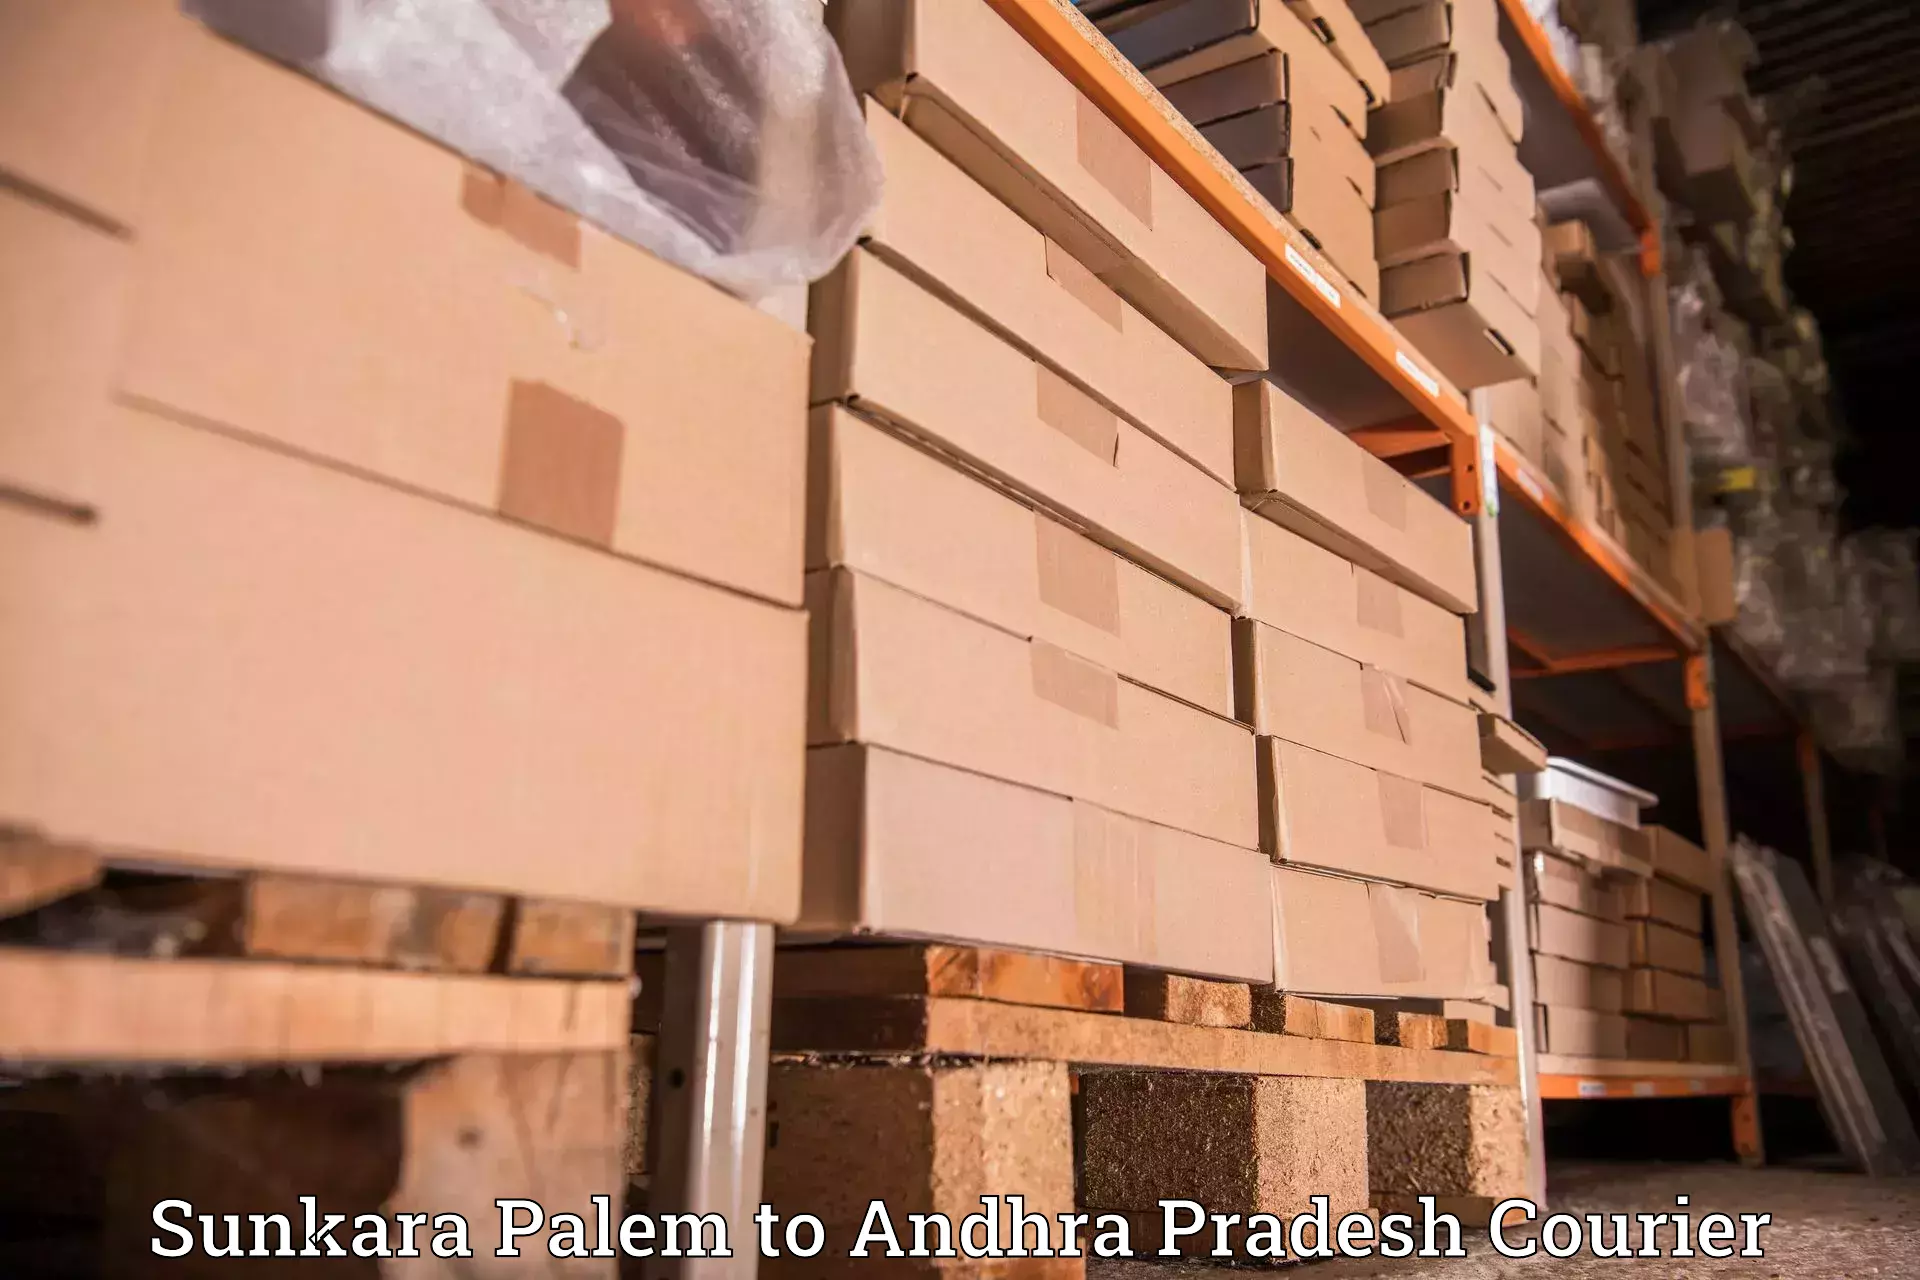 State-of-the-art courier technology Sunkara Palem to Gopalapuram